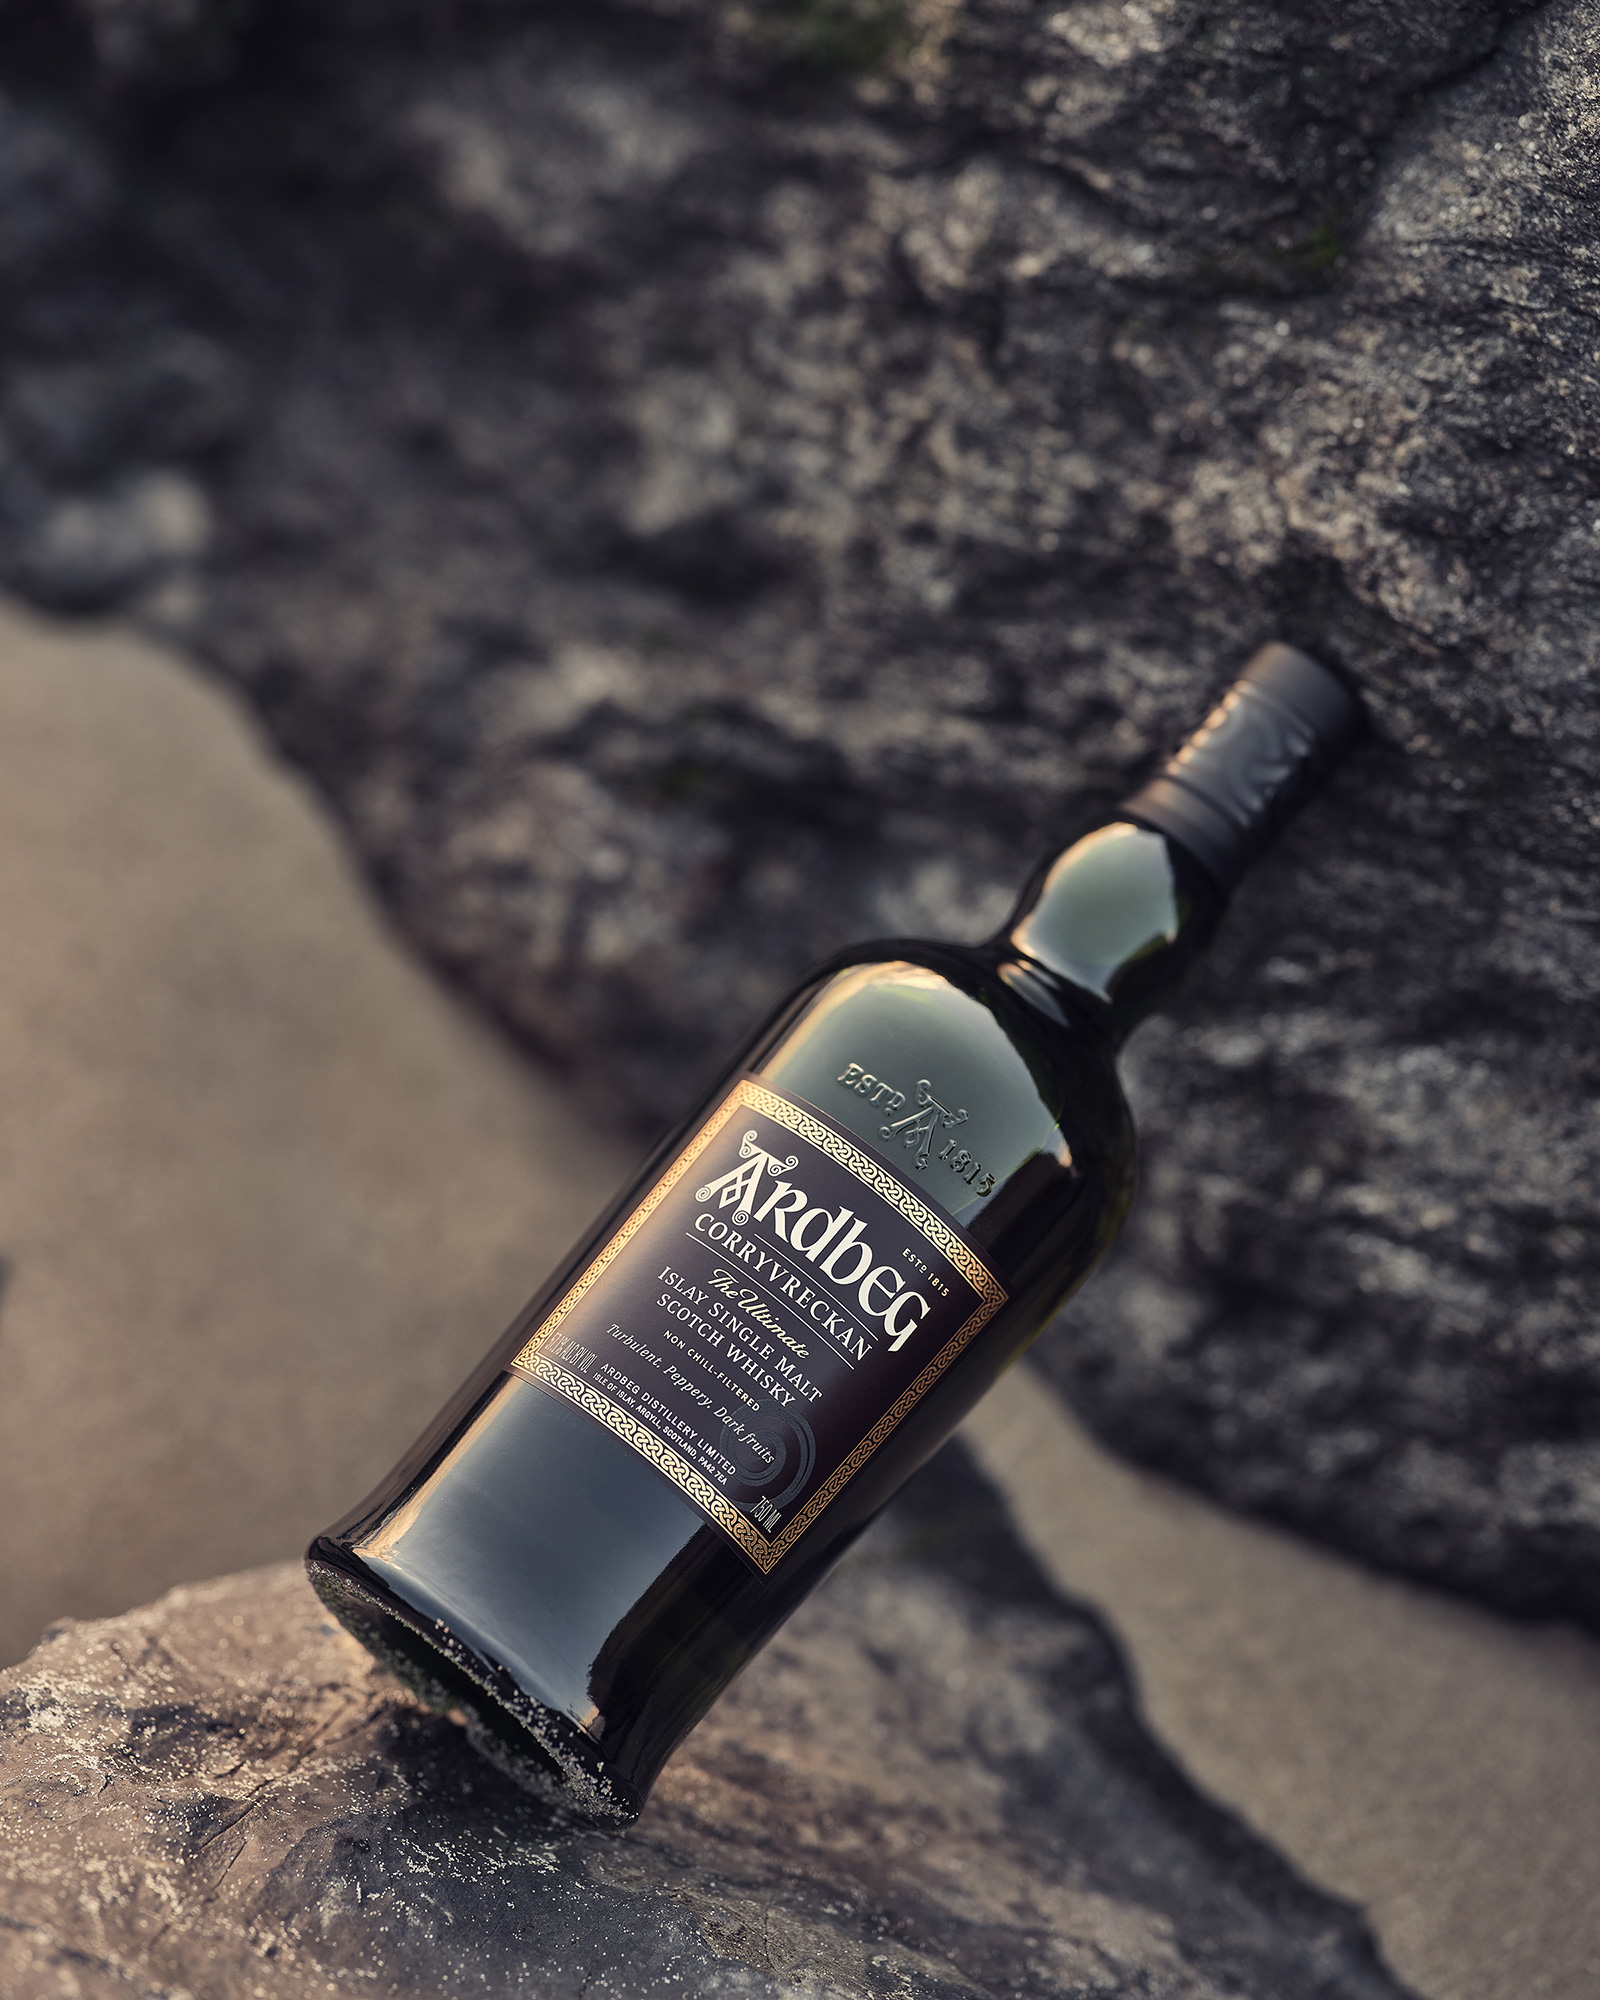 Ardbeg Corryvreckan Scotch Whisky, Craig LaCourt Commercial Photographer